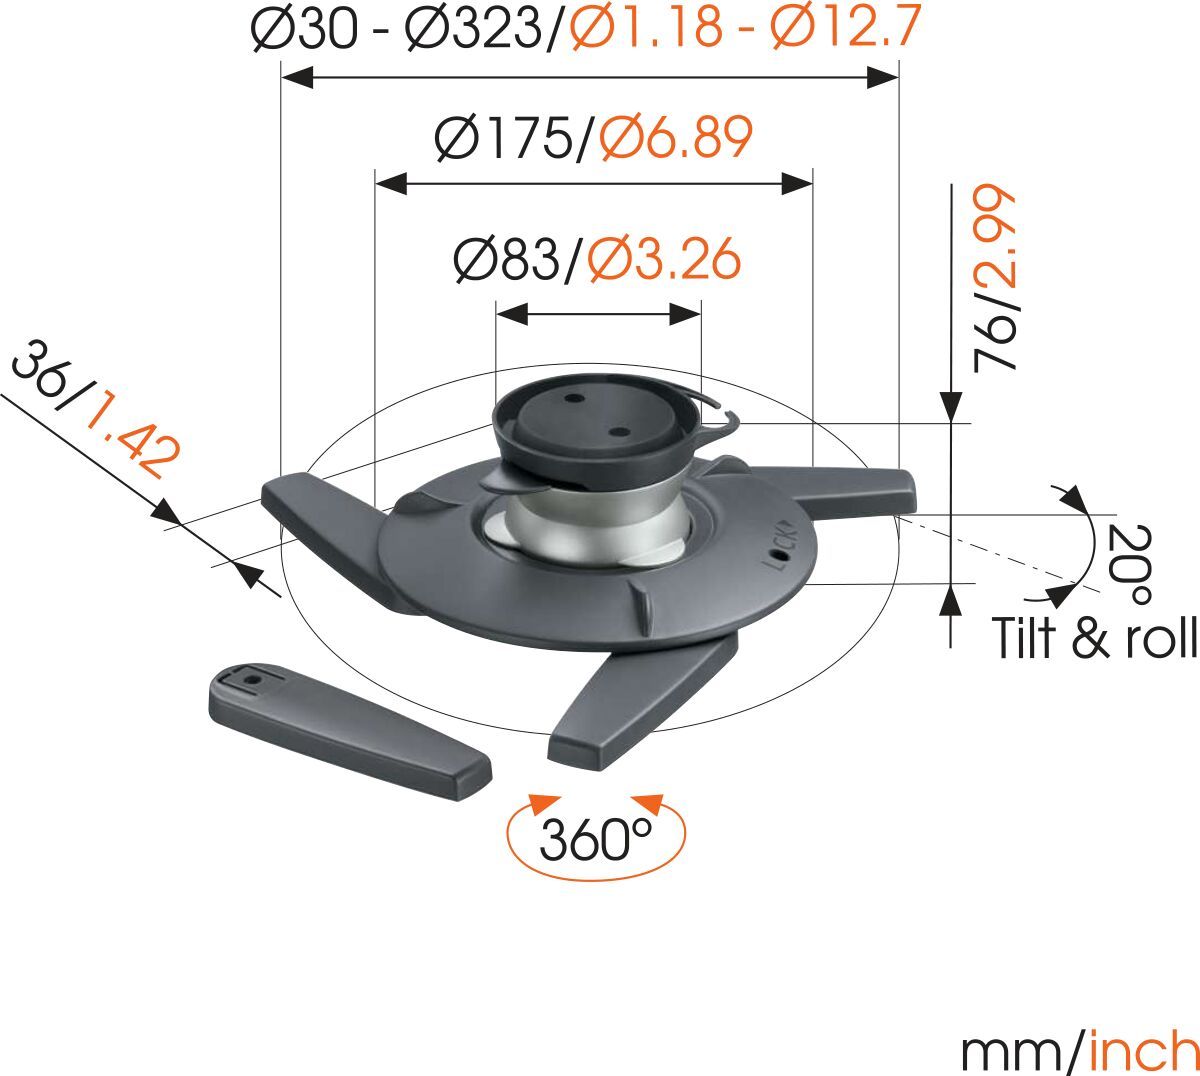 Vogel's EPC 6545 Projector Ceiling Mount - Max. laadgewicht: 10 kg - Dimensions